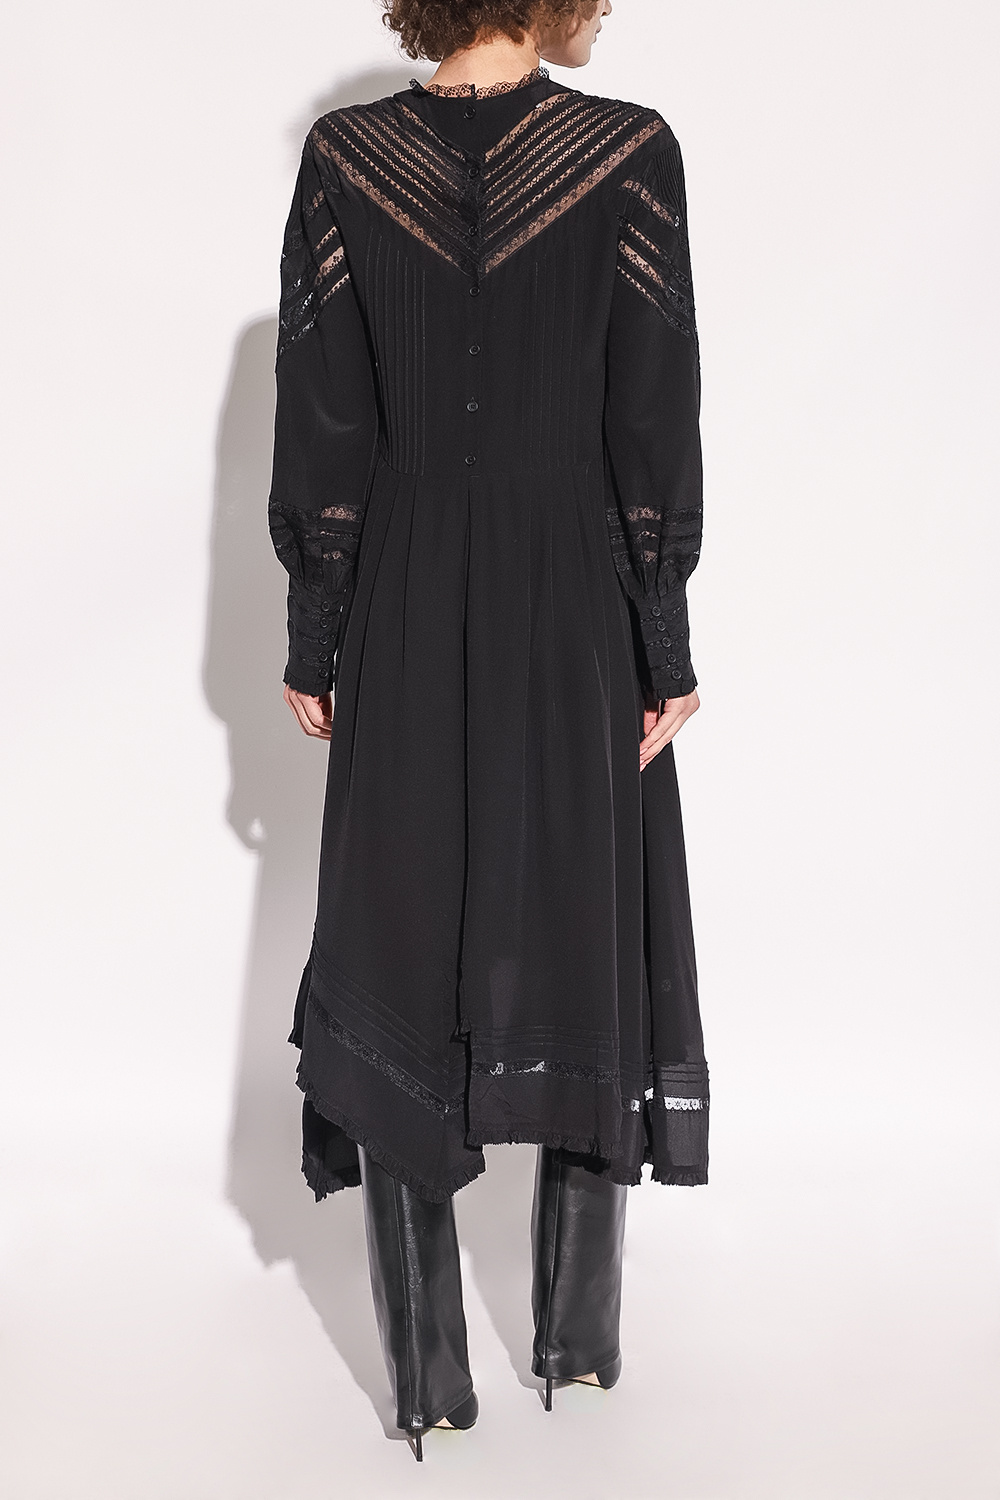 Zadig & Voltaire colette skinny dress